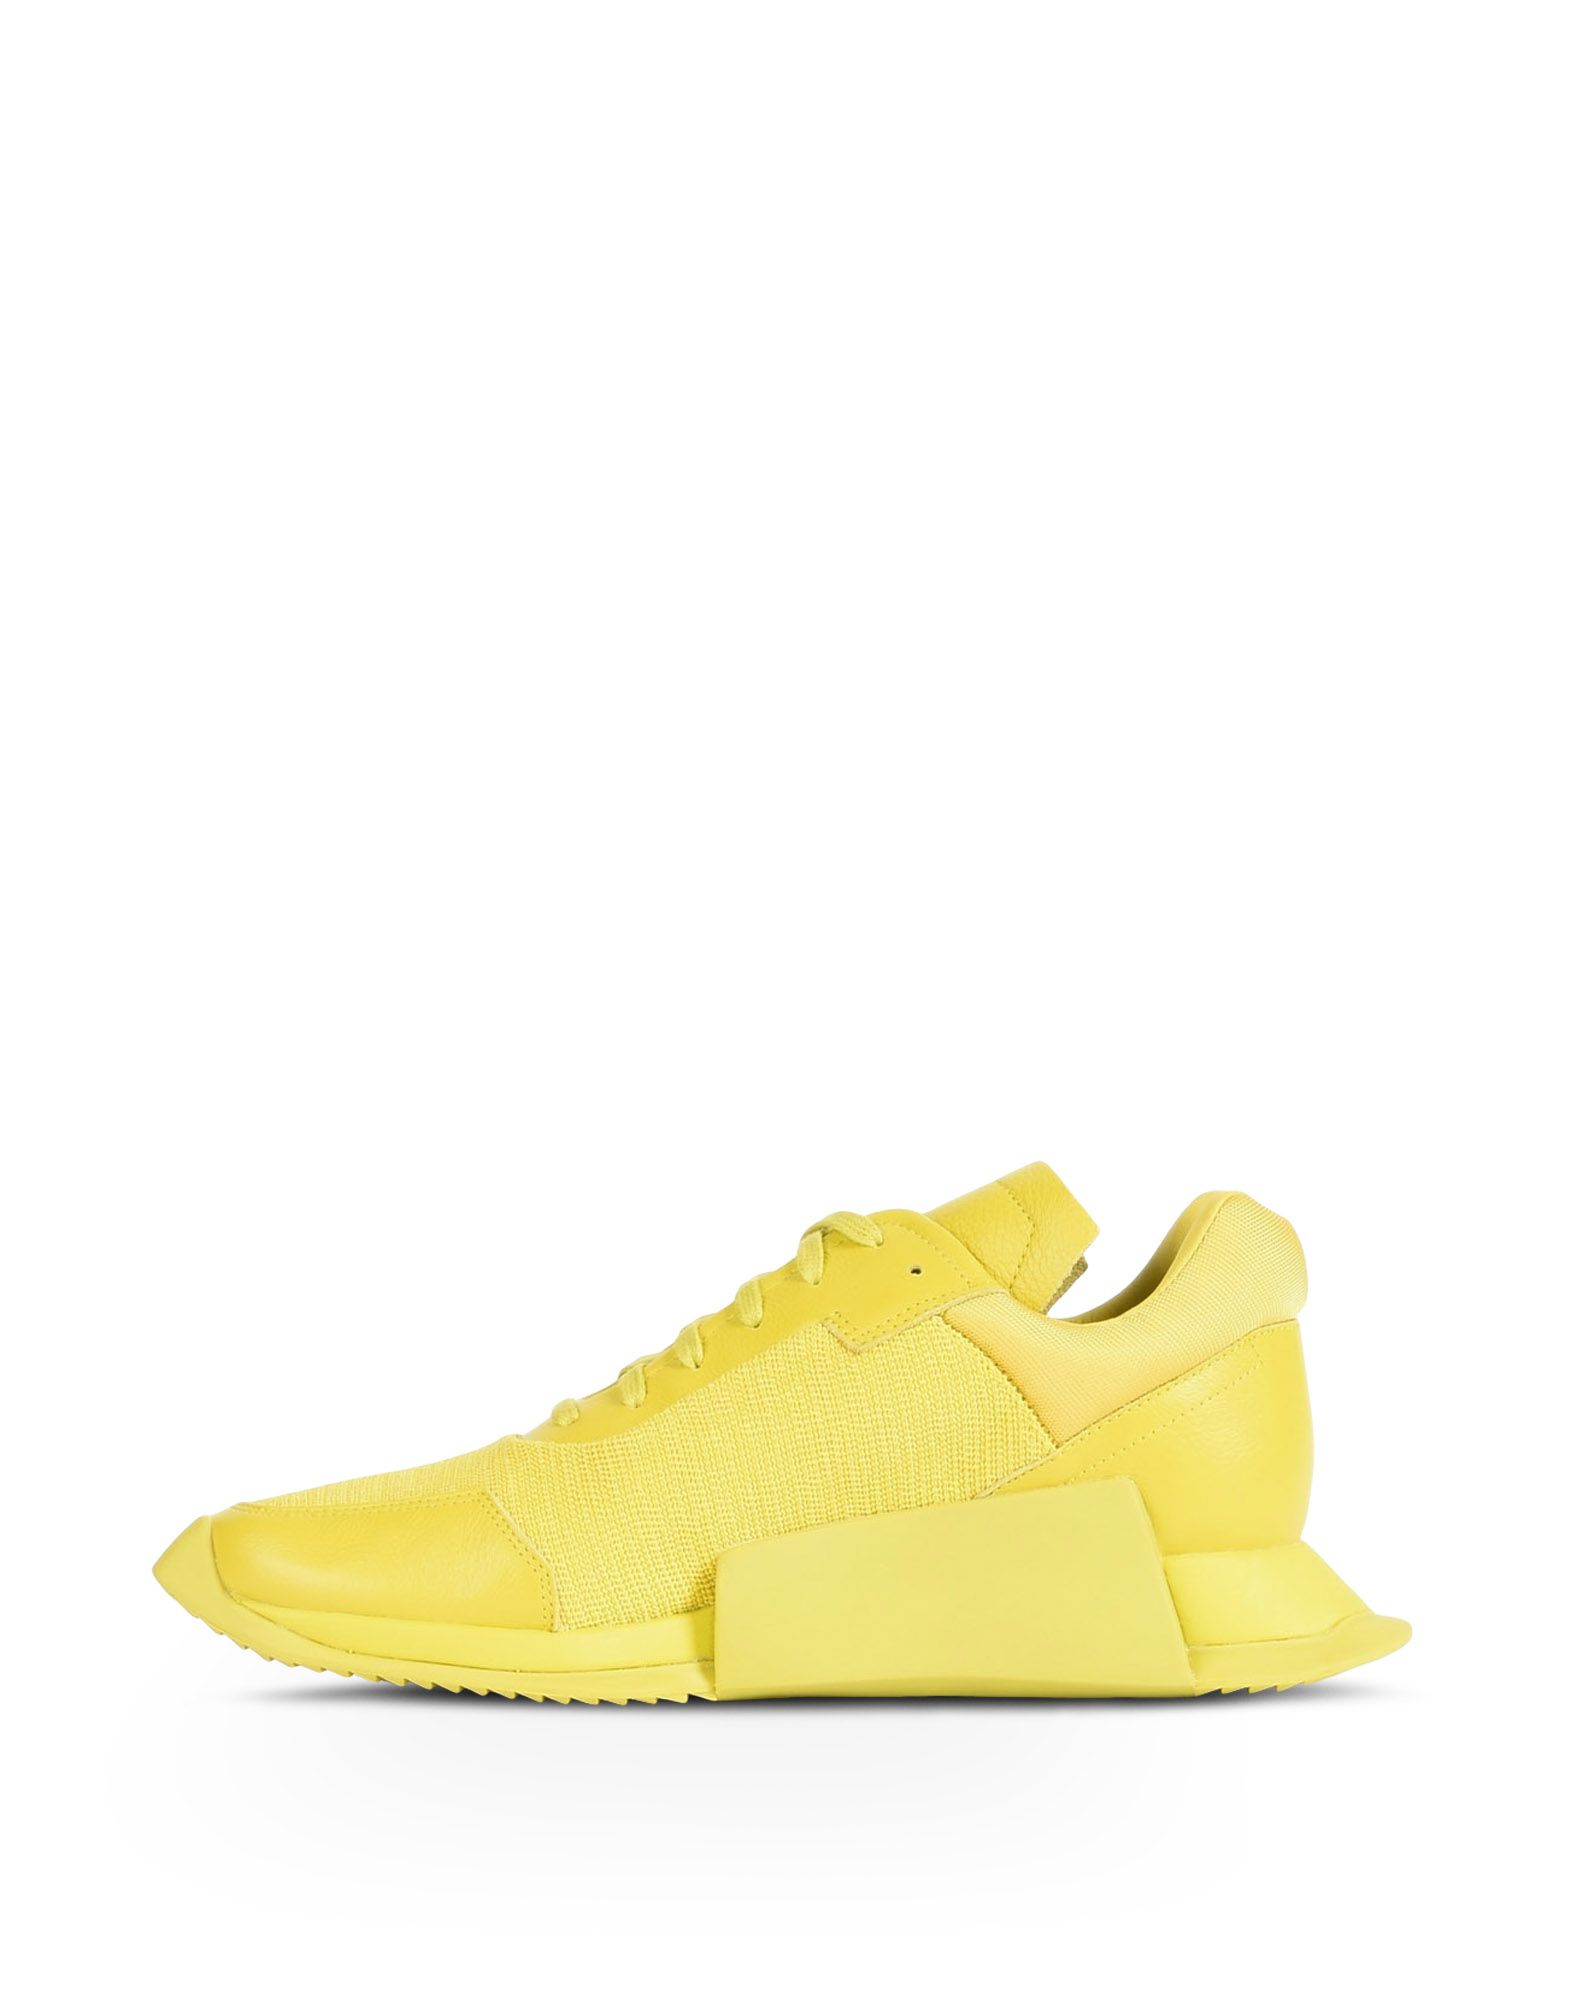 Rick Owens RO Level Runner Low II Sneakers in Yellow | Adidas Y-3 ...